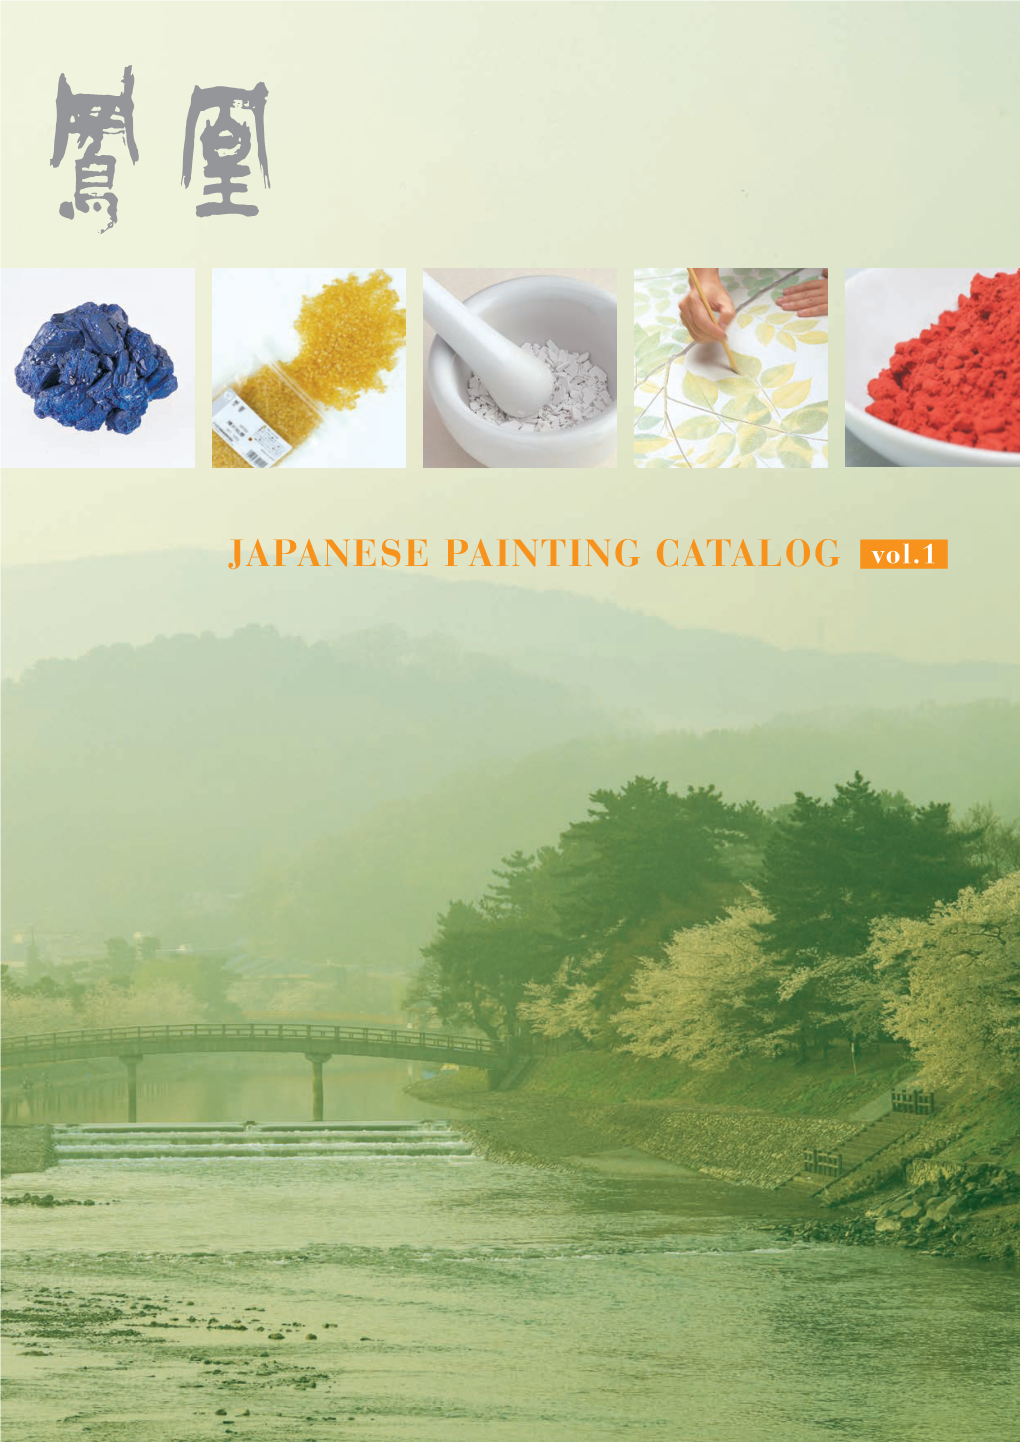 JAPANESE PAINTING CATALOG Vol.1